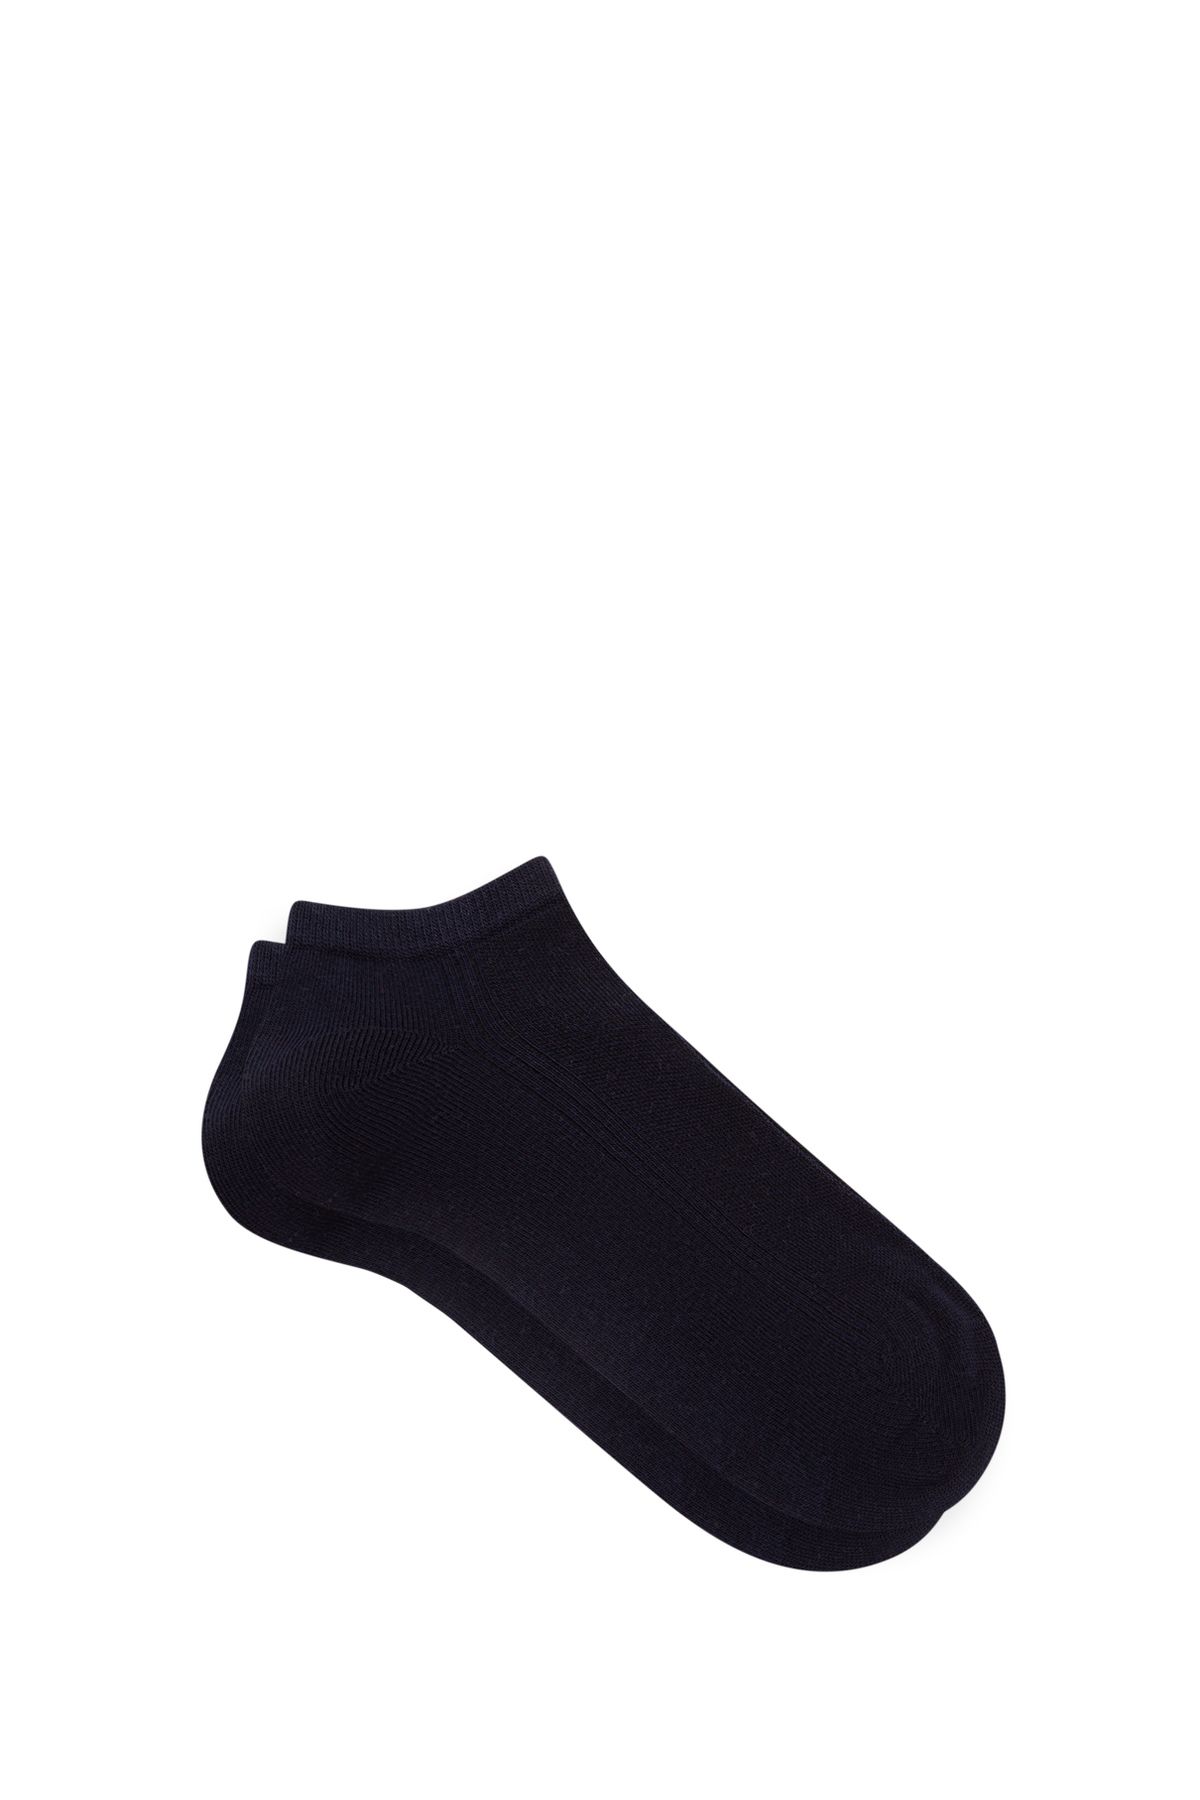 Mavi Siyah Patik Çorap 0910168-900